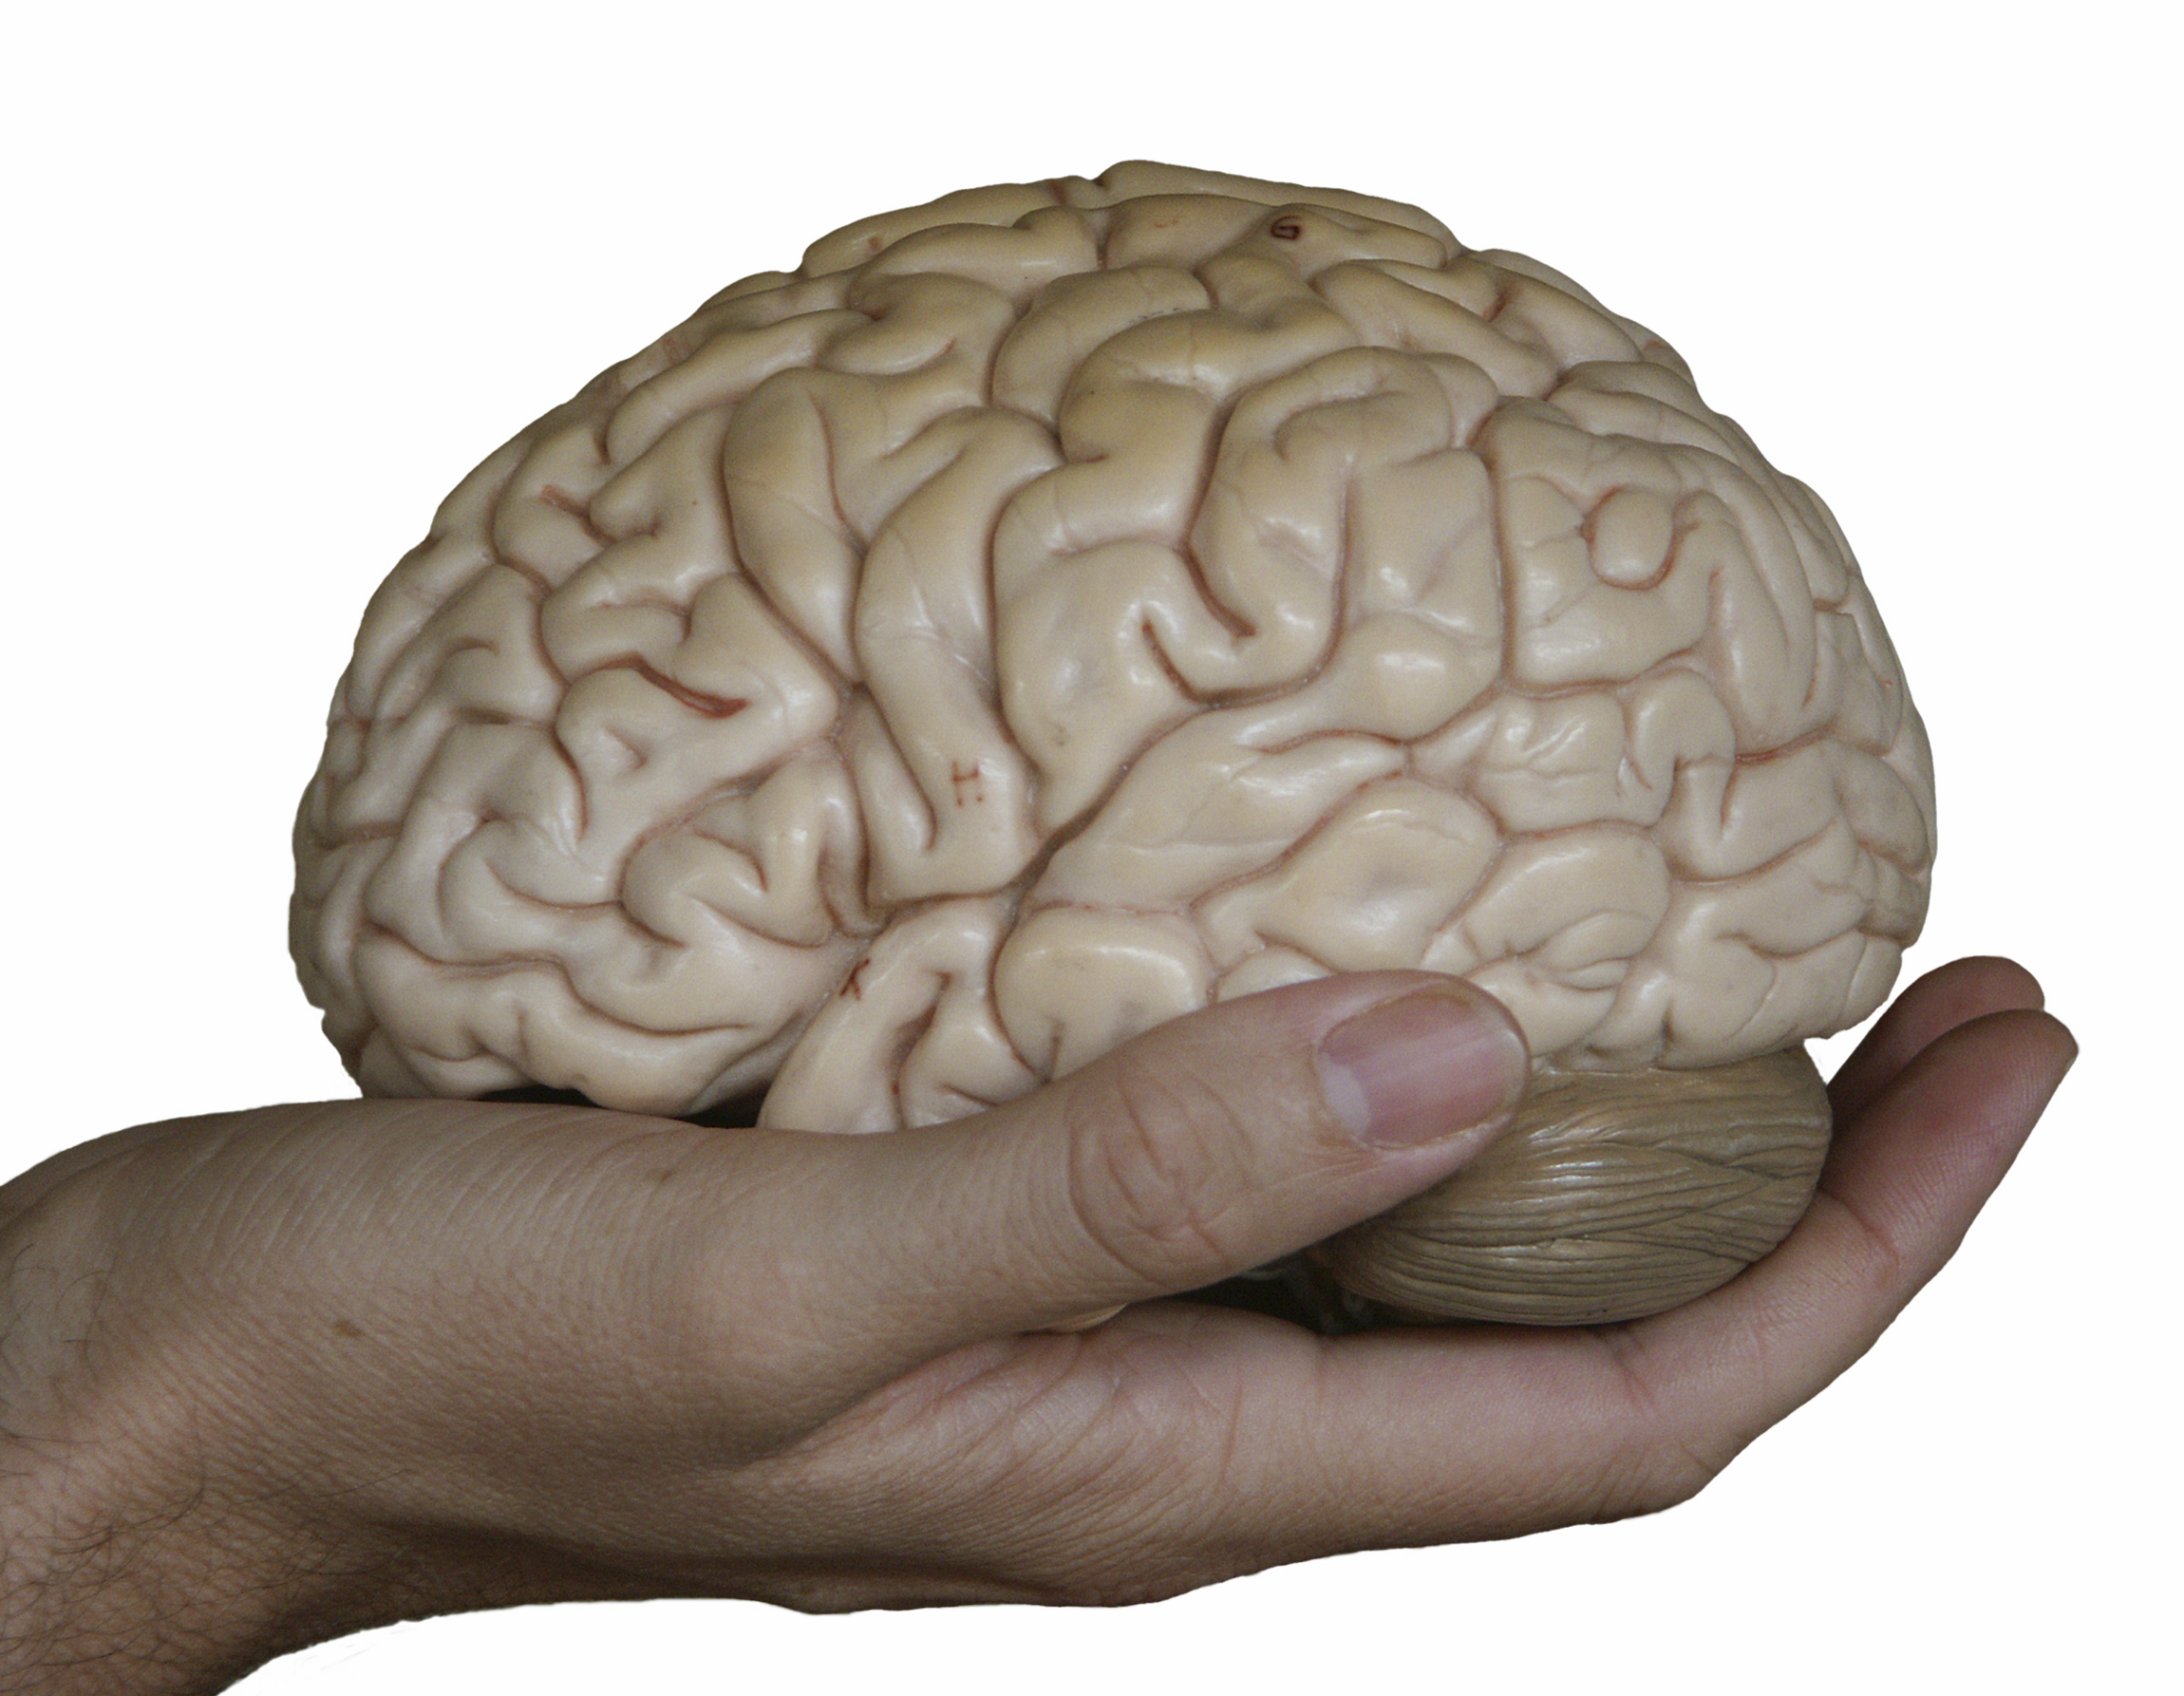 brain-in-hand